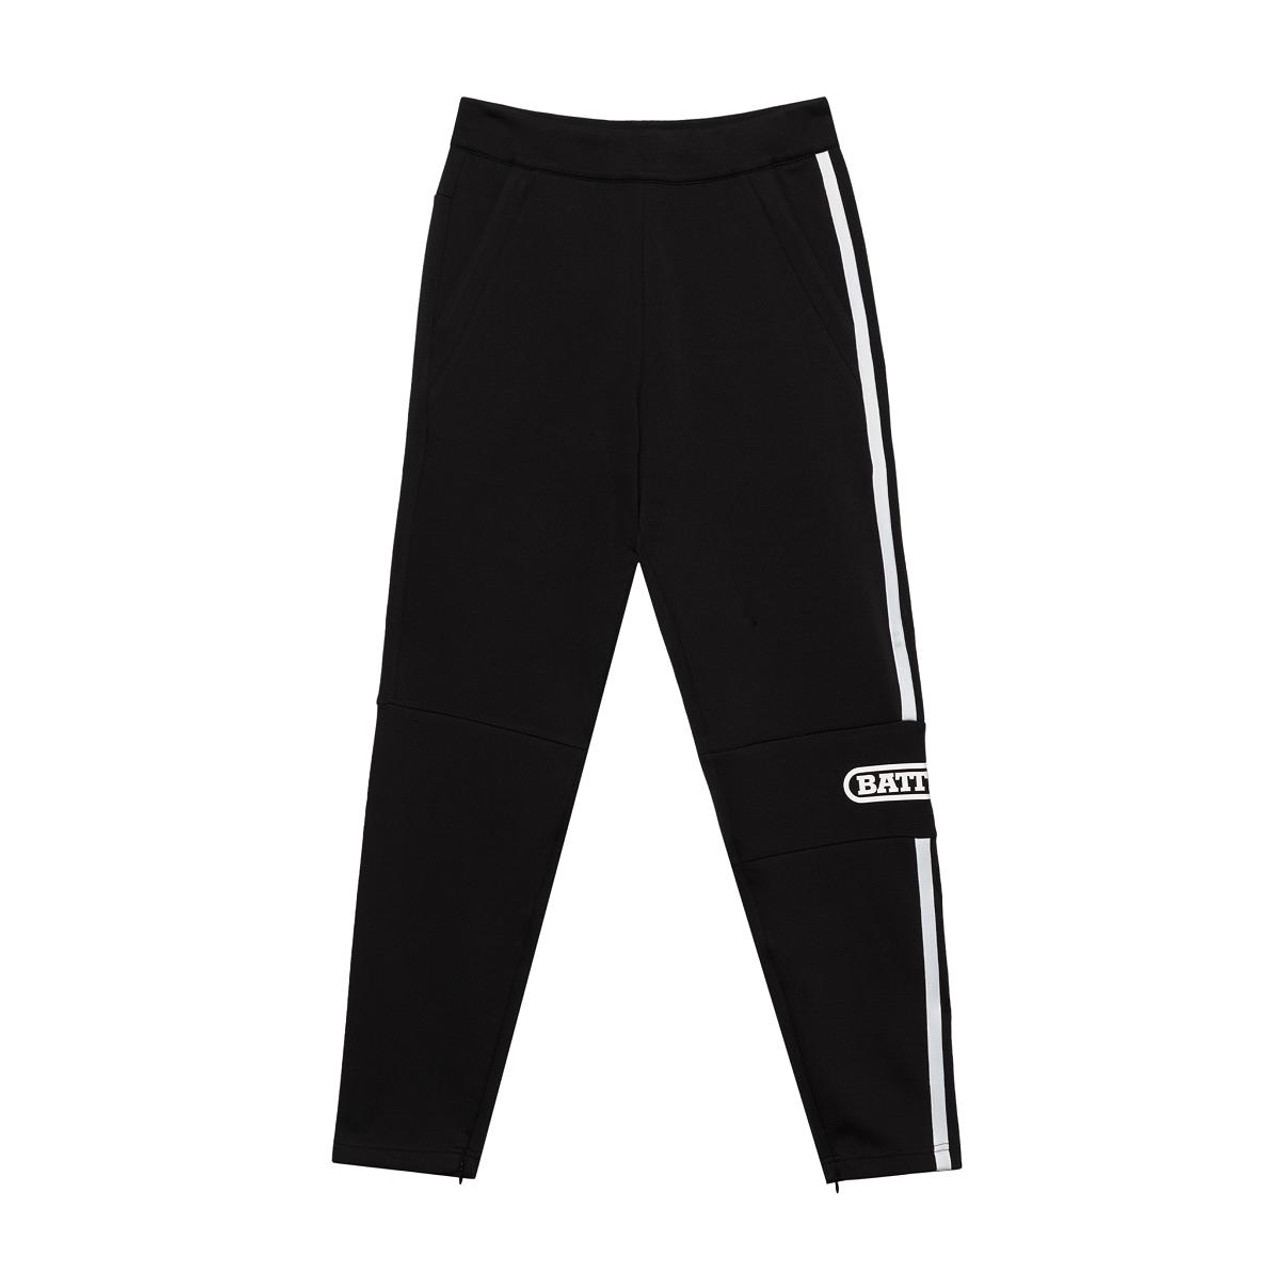 Men's Ultra Lightweight Polyester Fabric Sportswear Track Pants